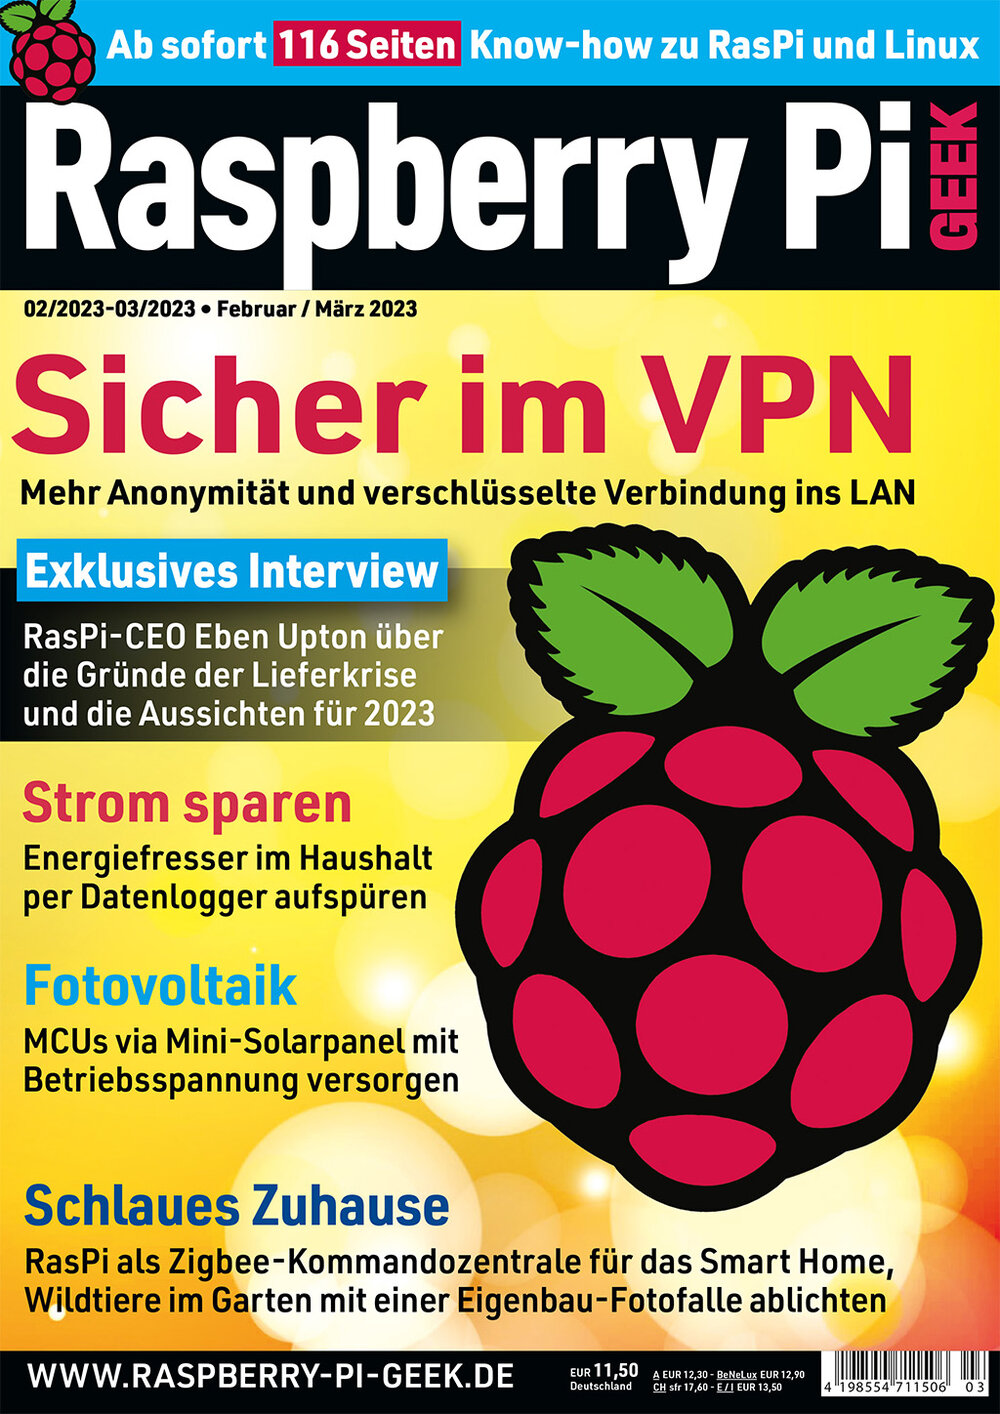 Raspberry Pi Geek ePaper 03/2023